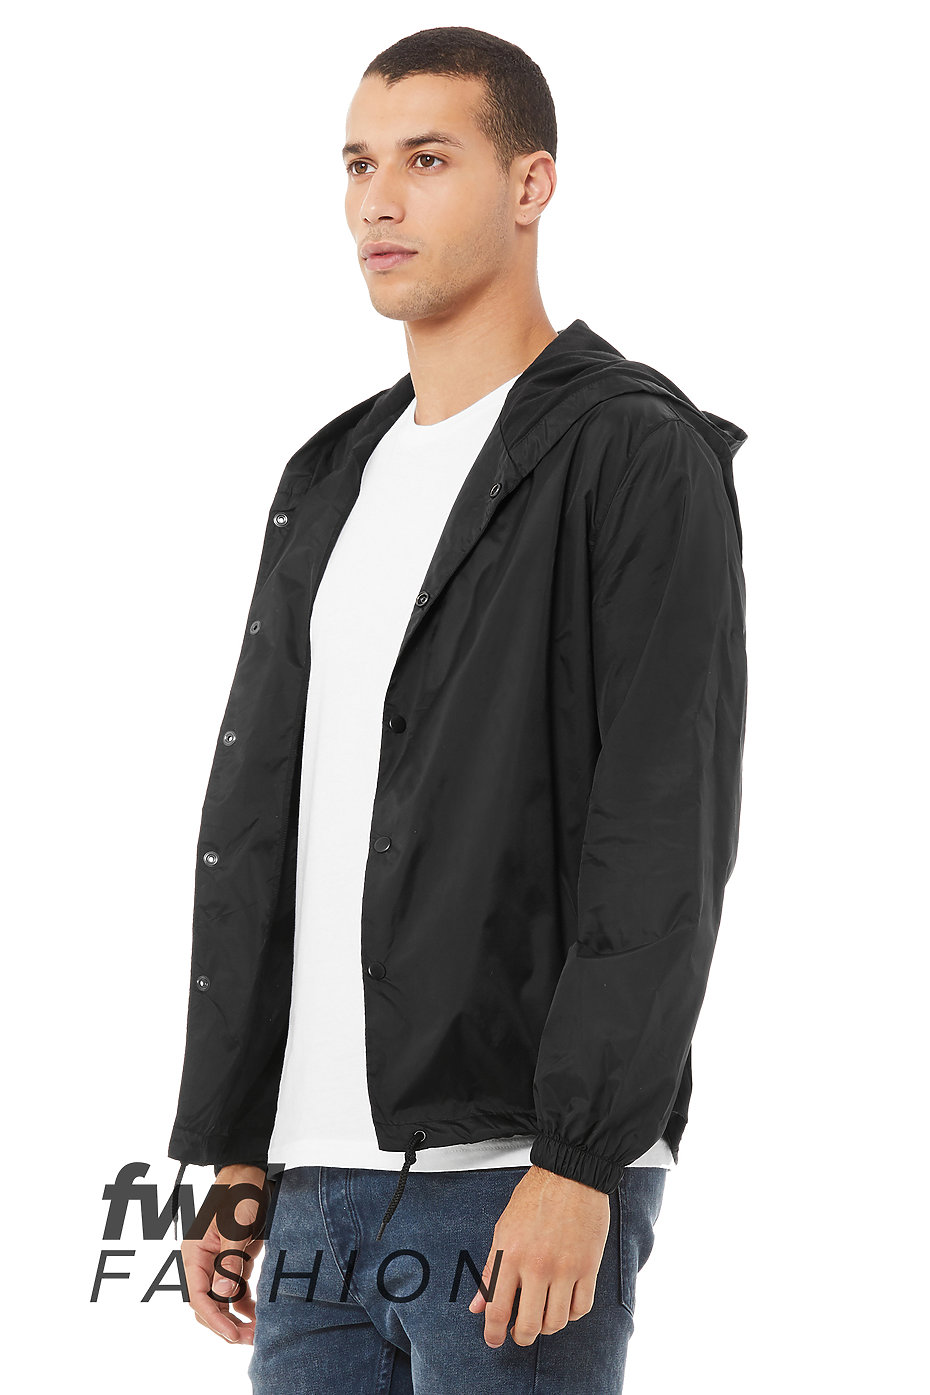 Custom Coaches Jacket | Mens Wholesale Clothing | Jackets For Men 